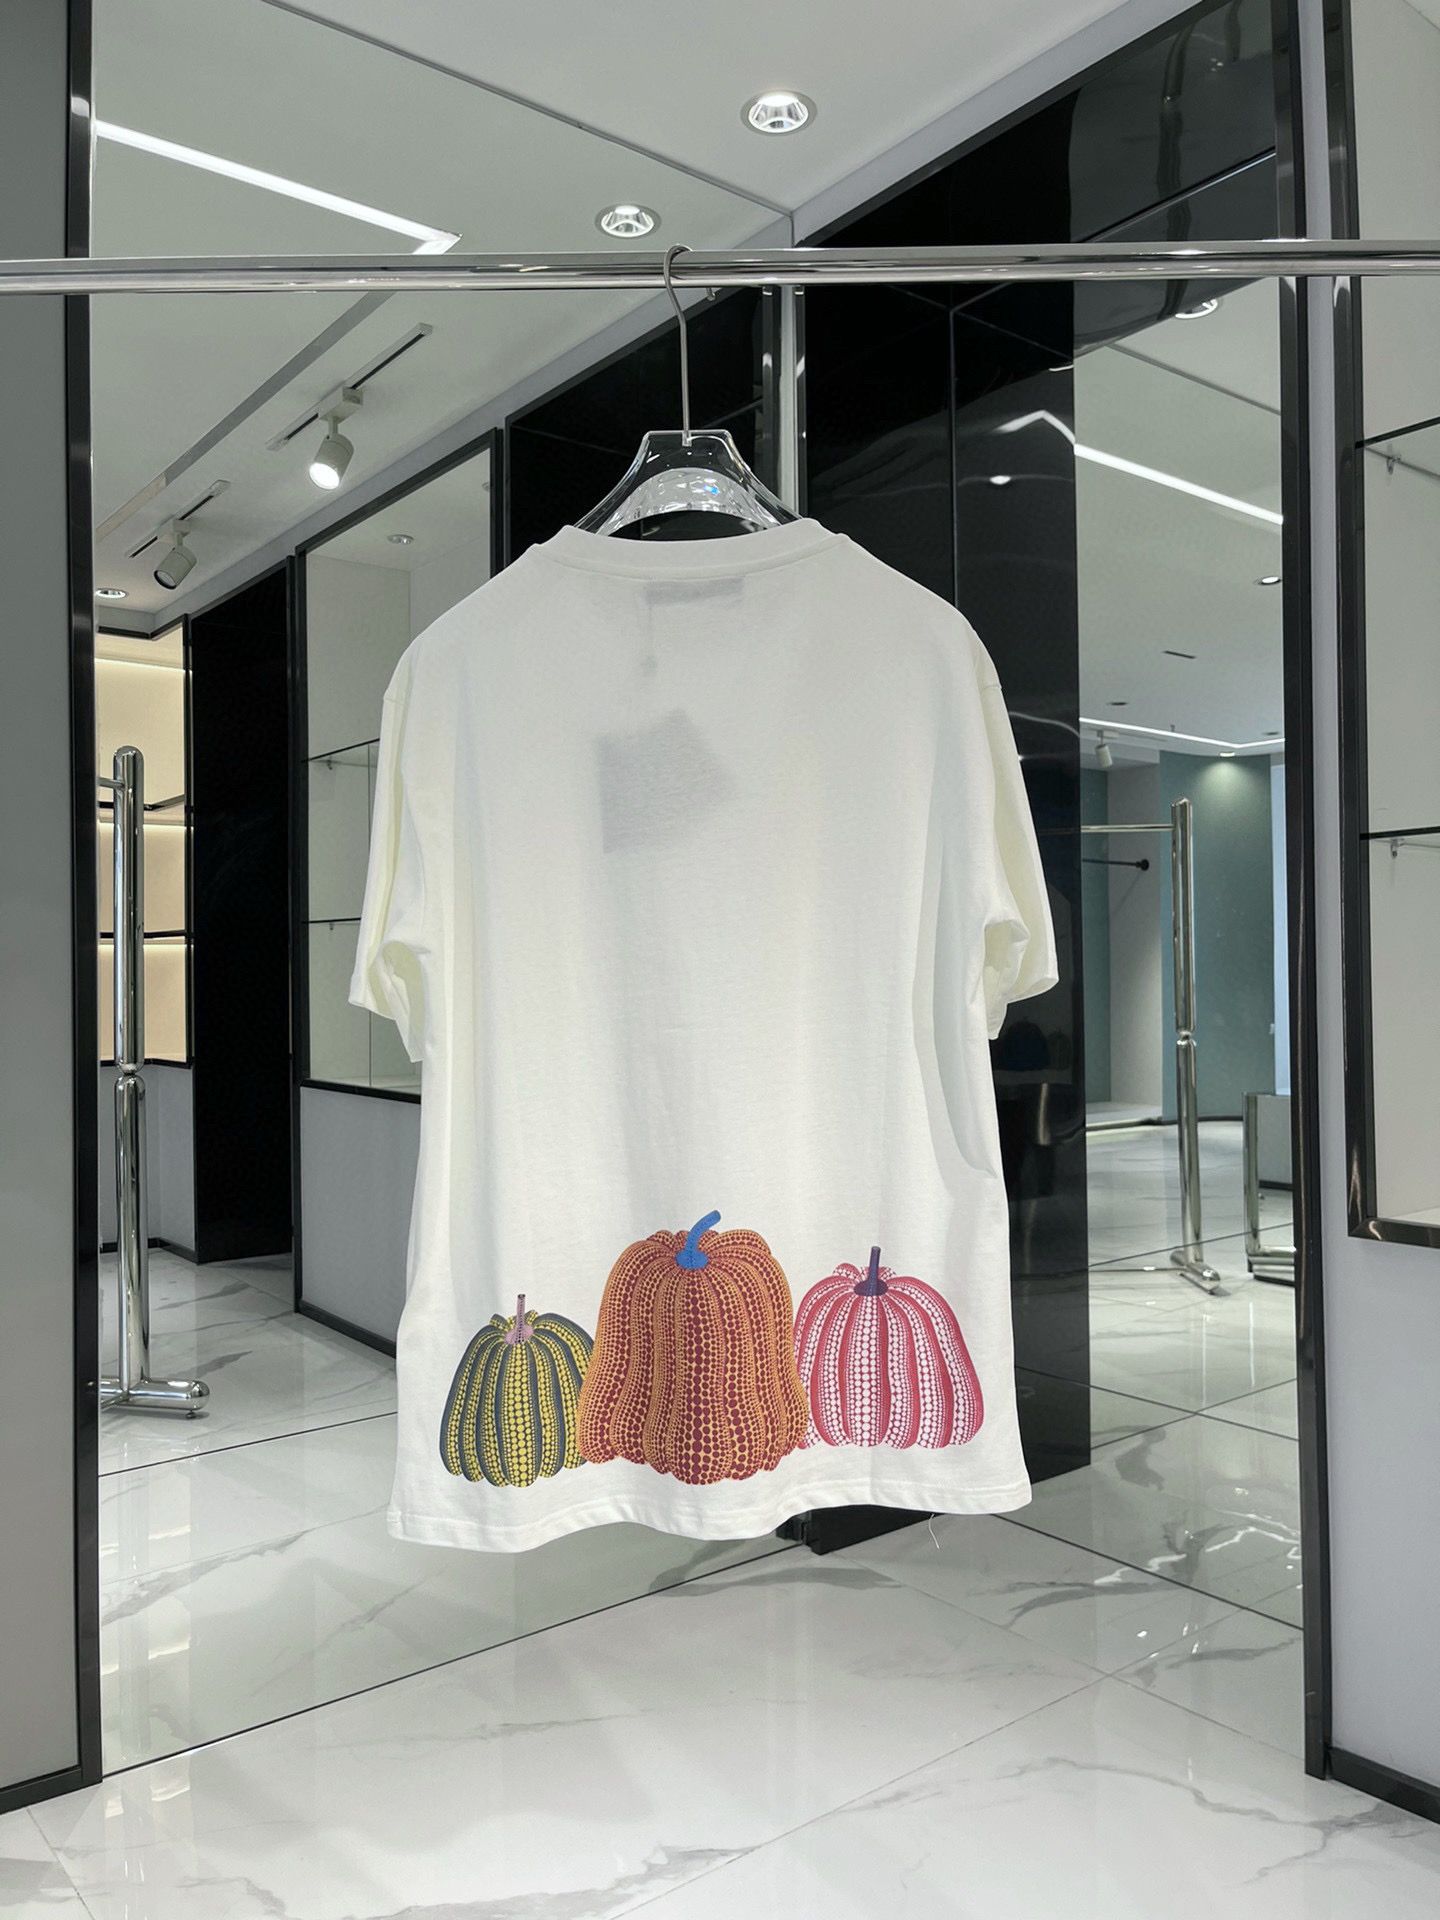 Louis Vuitton Tshirt Pumpkin Printed Yayoi Kusama 23SSYK Men's Size Xs White/Multicolor 1AB74W Cotton100%